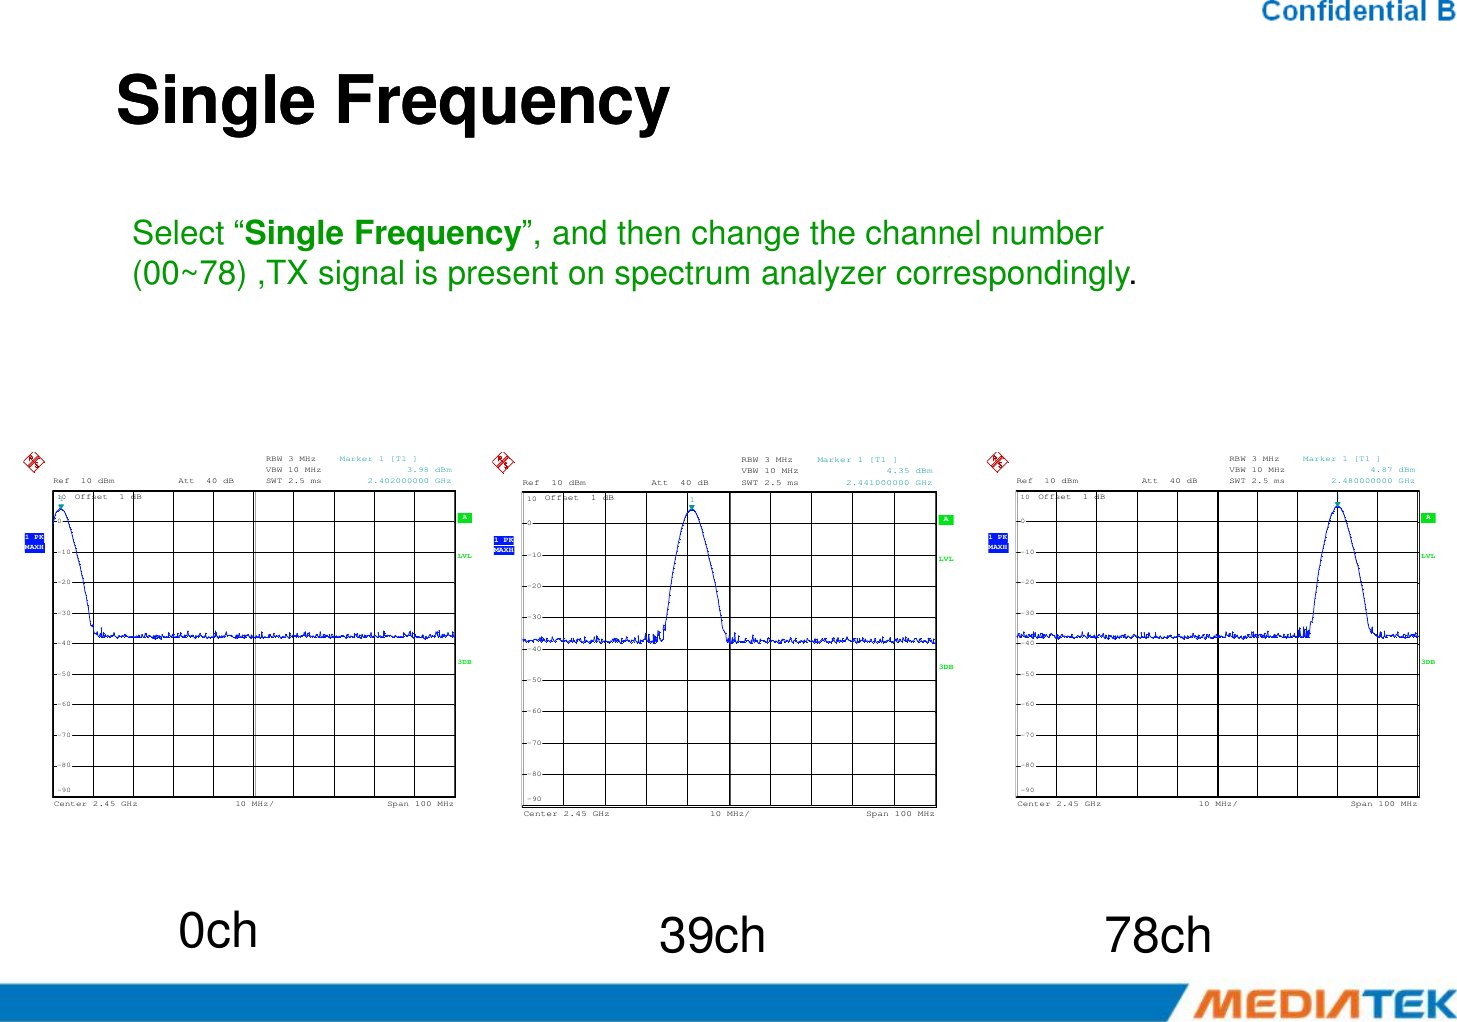 Single FrequencySingle Frequency A RBW 3 MHzVBW 10 MHzSWT 2.5 msOffset  1 dBRef 10 dBmAtt 40 dB0101Marker 1 [T1 ]            3.98 dBm     2.402000000 GHzSelect “Single Frequency”, and then change the channel number (00~78) ,TX signal is present on spectrum analyzer correspondingly. A RBW 3 MHzVBW 10 MHzSWT 2.5 msOffset  1 dBRef 10 dBmAtt 40 dB0101Marker 1 [T1 ]            4.35 dBm     2.441000000 GHz A RBW 3 MHzVBW 10 MHzSWT 2.5 msOffset  1 dBRef 10 dBmAtt 40 dB0101Marker 1 [T1 ]            4.87 dBm     2.480000000 GHz A 3DBLVLCenter2.45 GHz Span100 MHz10 MHz/ 1 PKMAXH-90-80-70-60-50-40-30-20-1000ch 39ch 78ch A 3DBLVLCenter2.45 GHz Span100 MHz10 MHz/ 1 PKMAXH-90-80-70-60-50-40-30-20-100 A 3DBLVLCenter2.45 GHz Span100 MHz10 MHz/ 1 PKMAXH-90-80-70-60-50-40-30-20-100